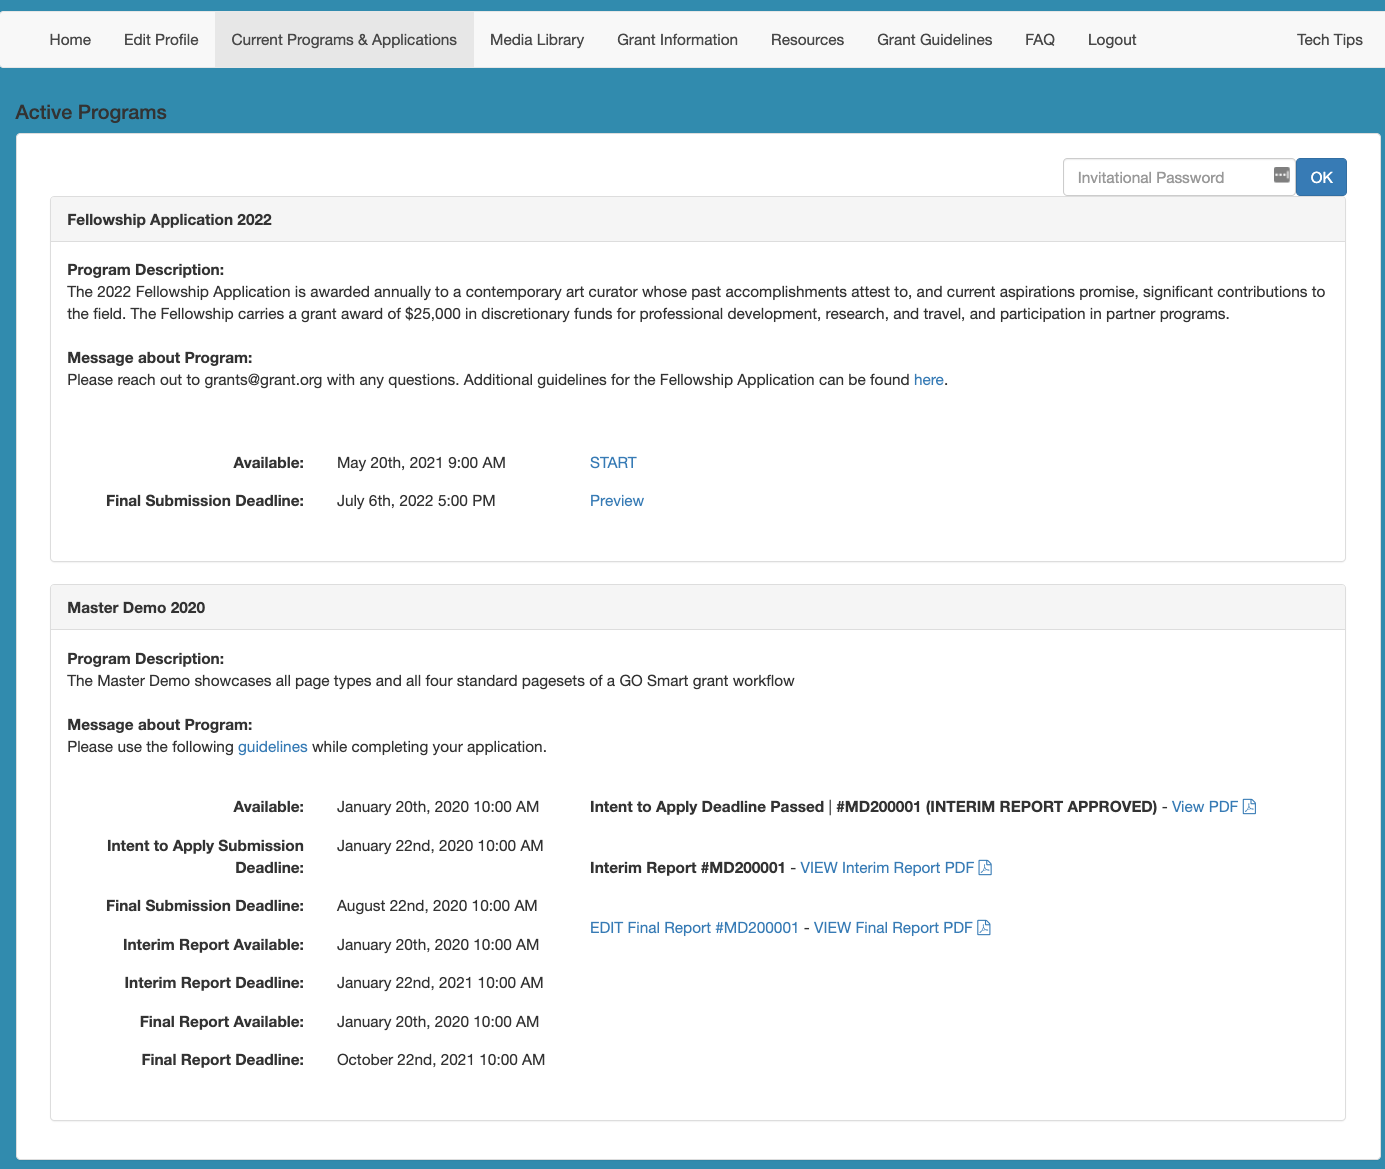 Screenshot of the Current Programs & Applications tab